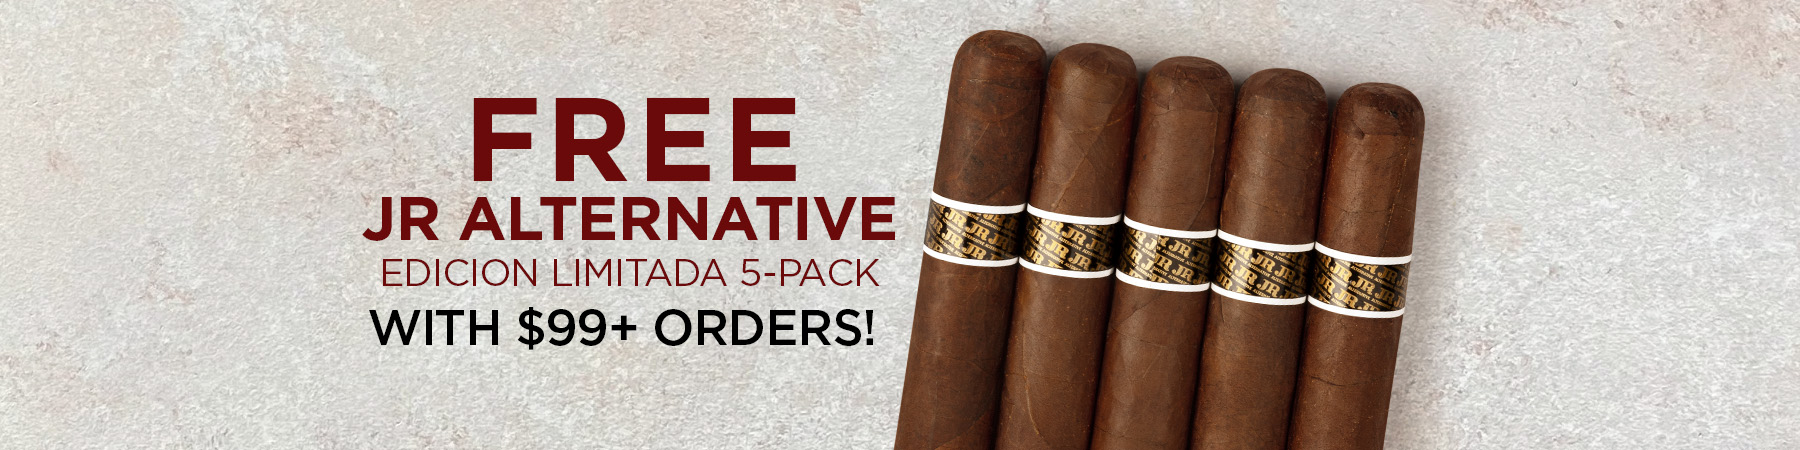 Spend $99 Get a Free 5 Pack of JR Alternative Edicion Limitada